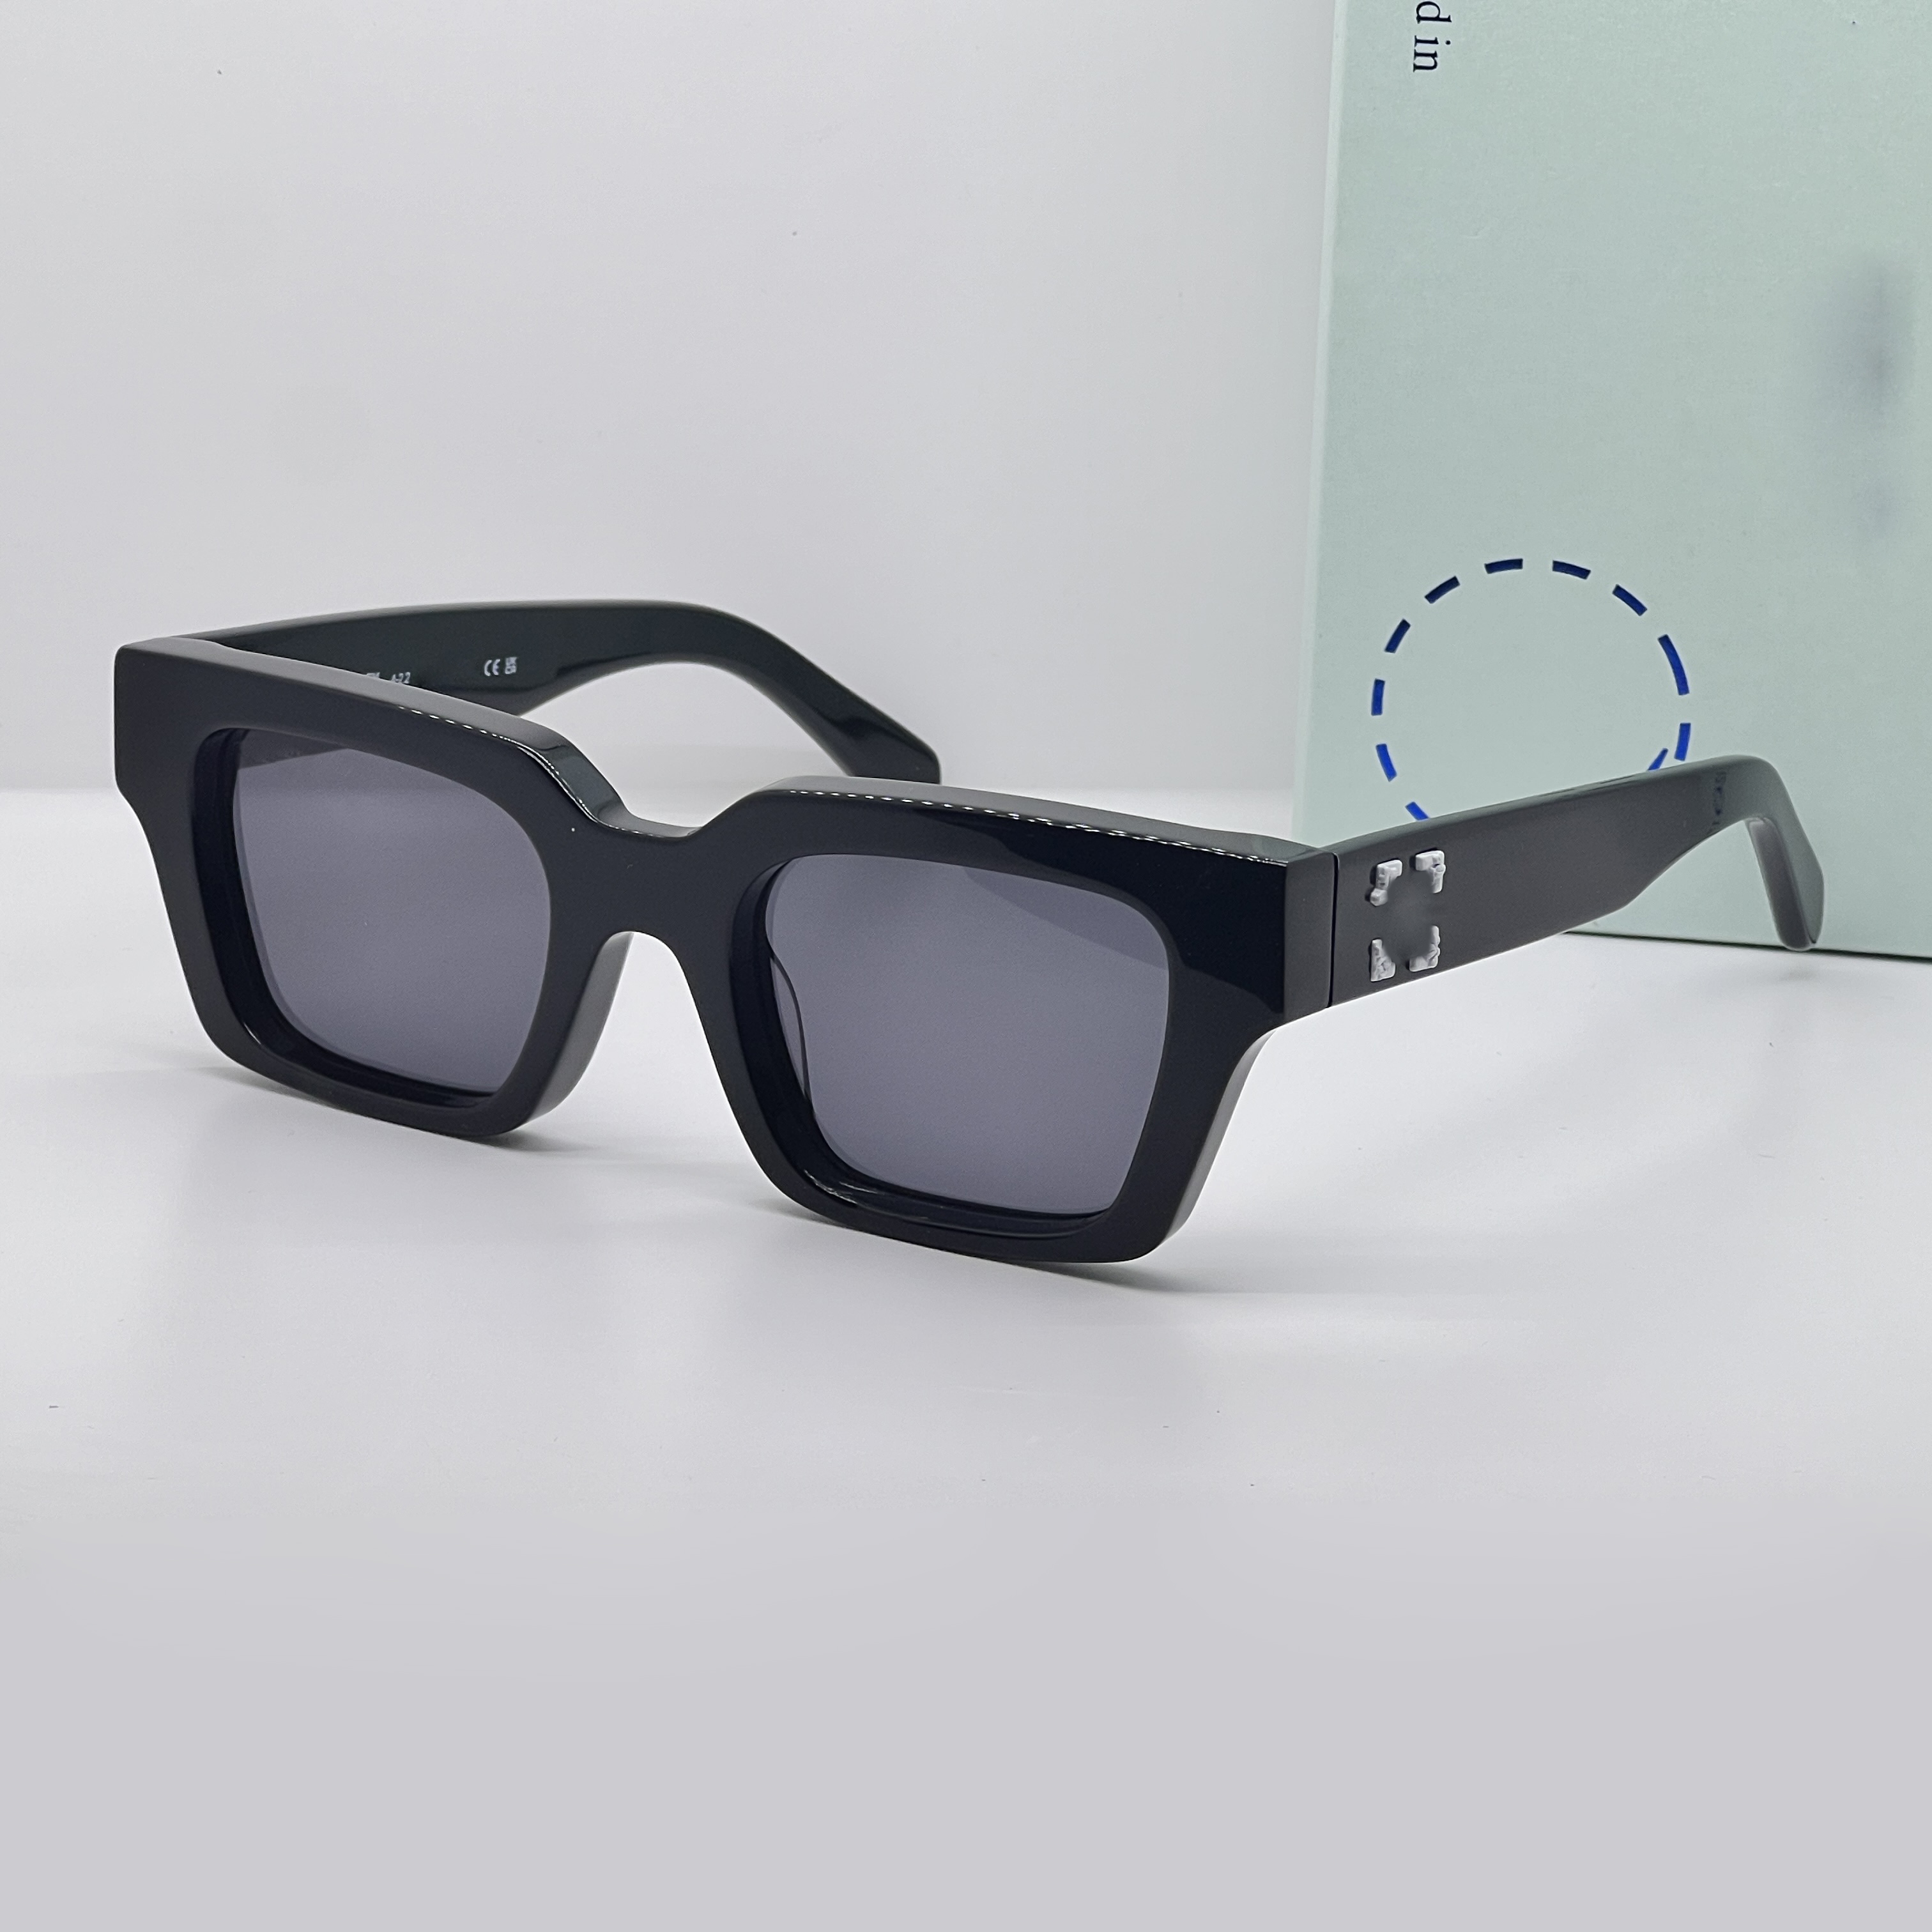 Off Ice White Sunglasses luksusowy projektant słynna marka Oeri008 Virgil UV400 Protect soczewki Outdoor Square Frame OEM OEM Retro Okulara W zestawie oryginalne obudowy